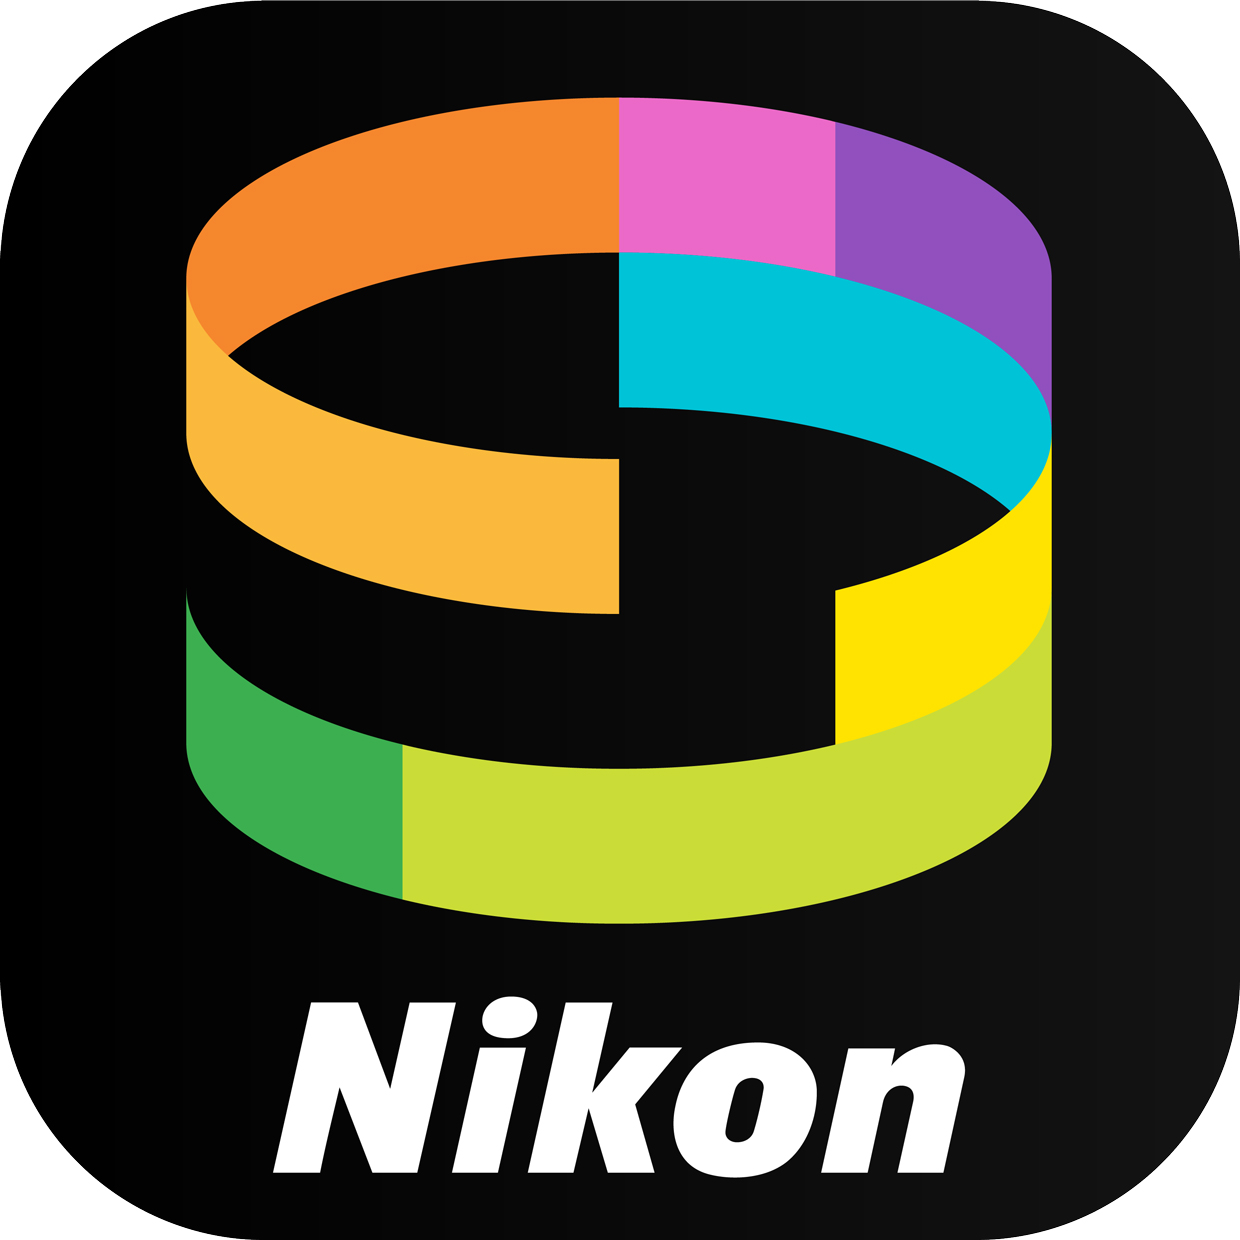 Nikon releases Ver.2.11.0 of the SnapBridge app